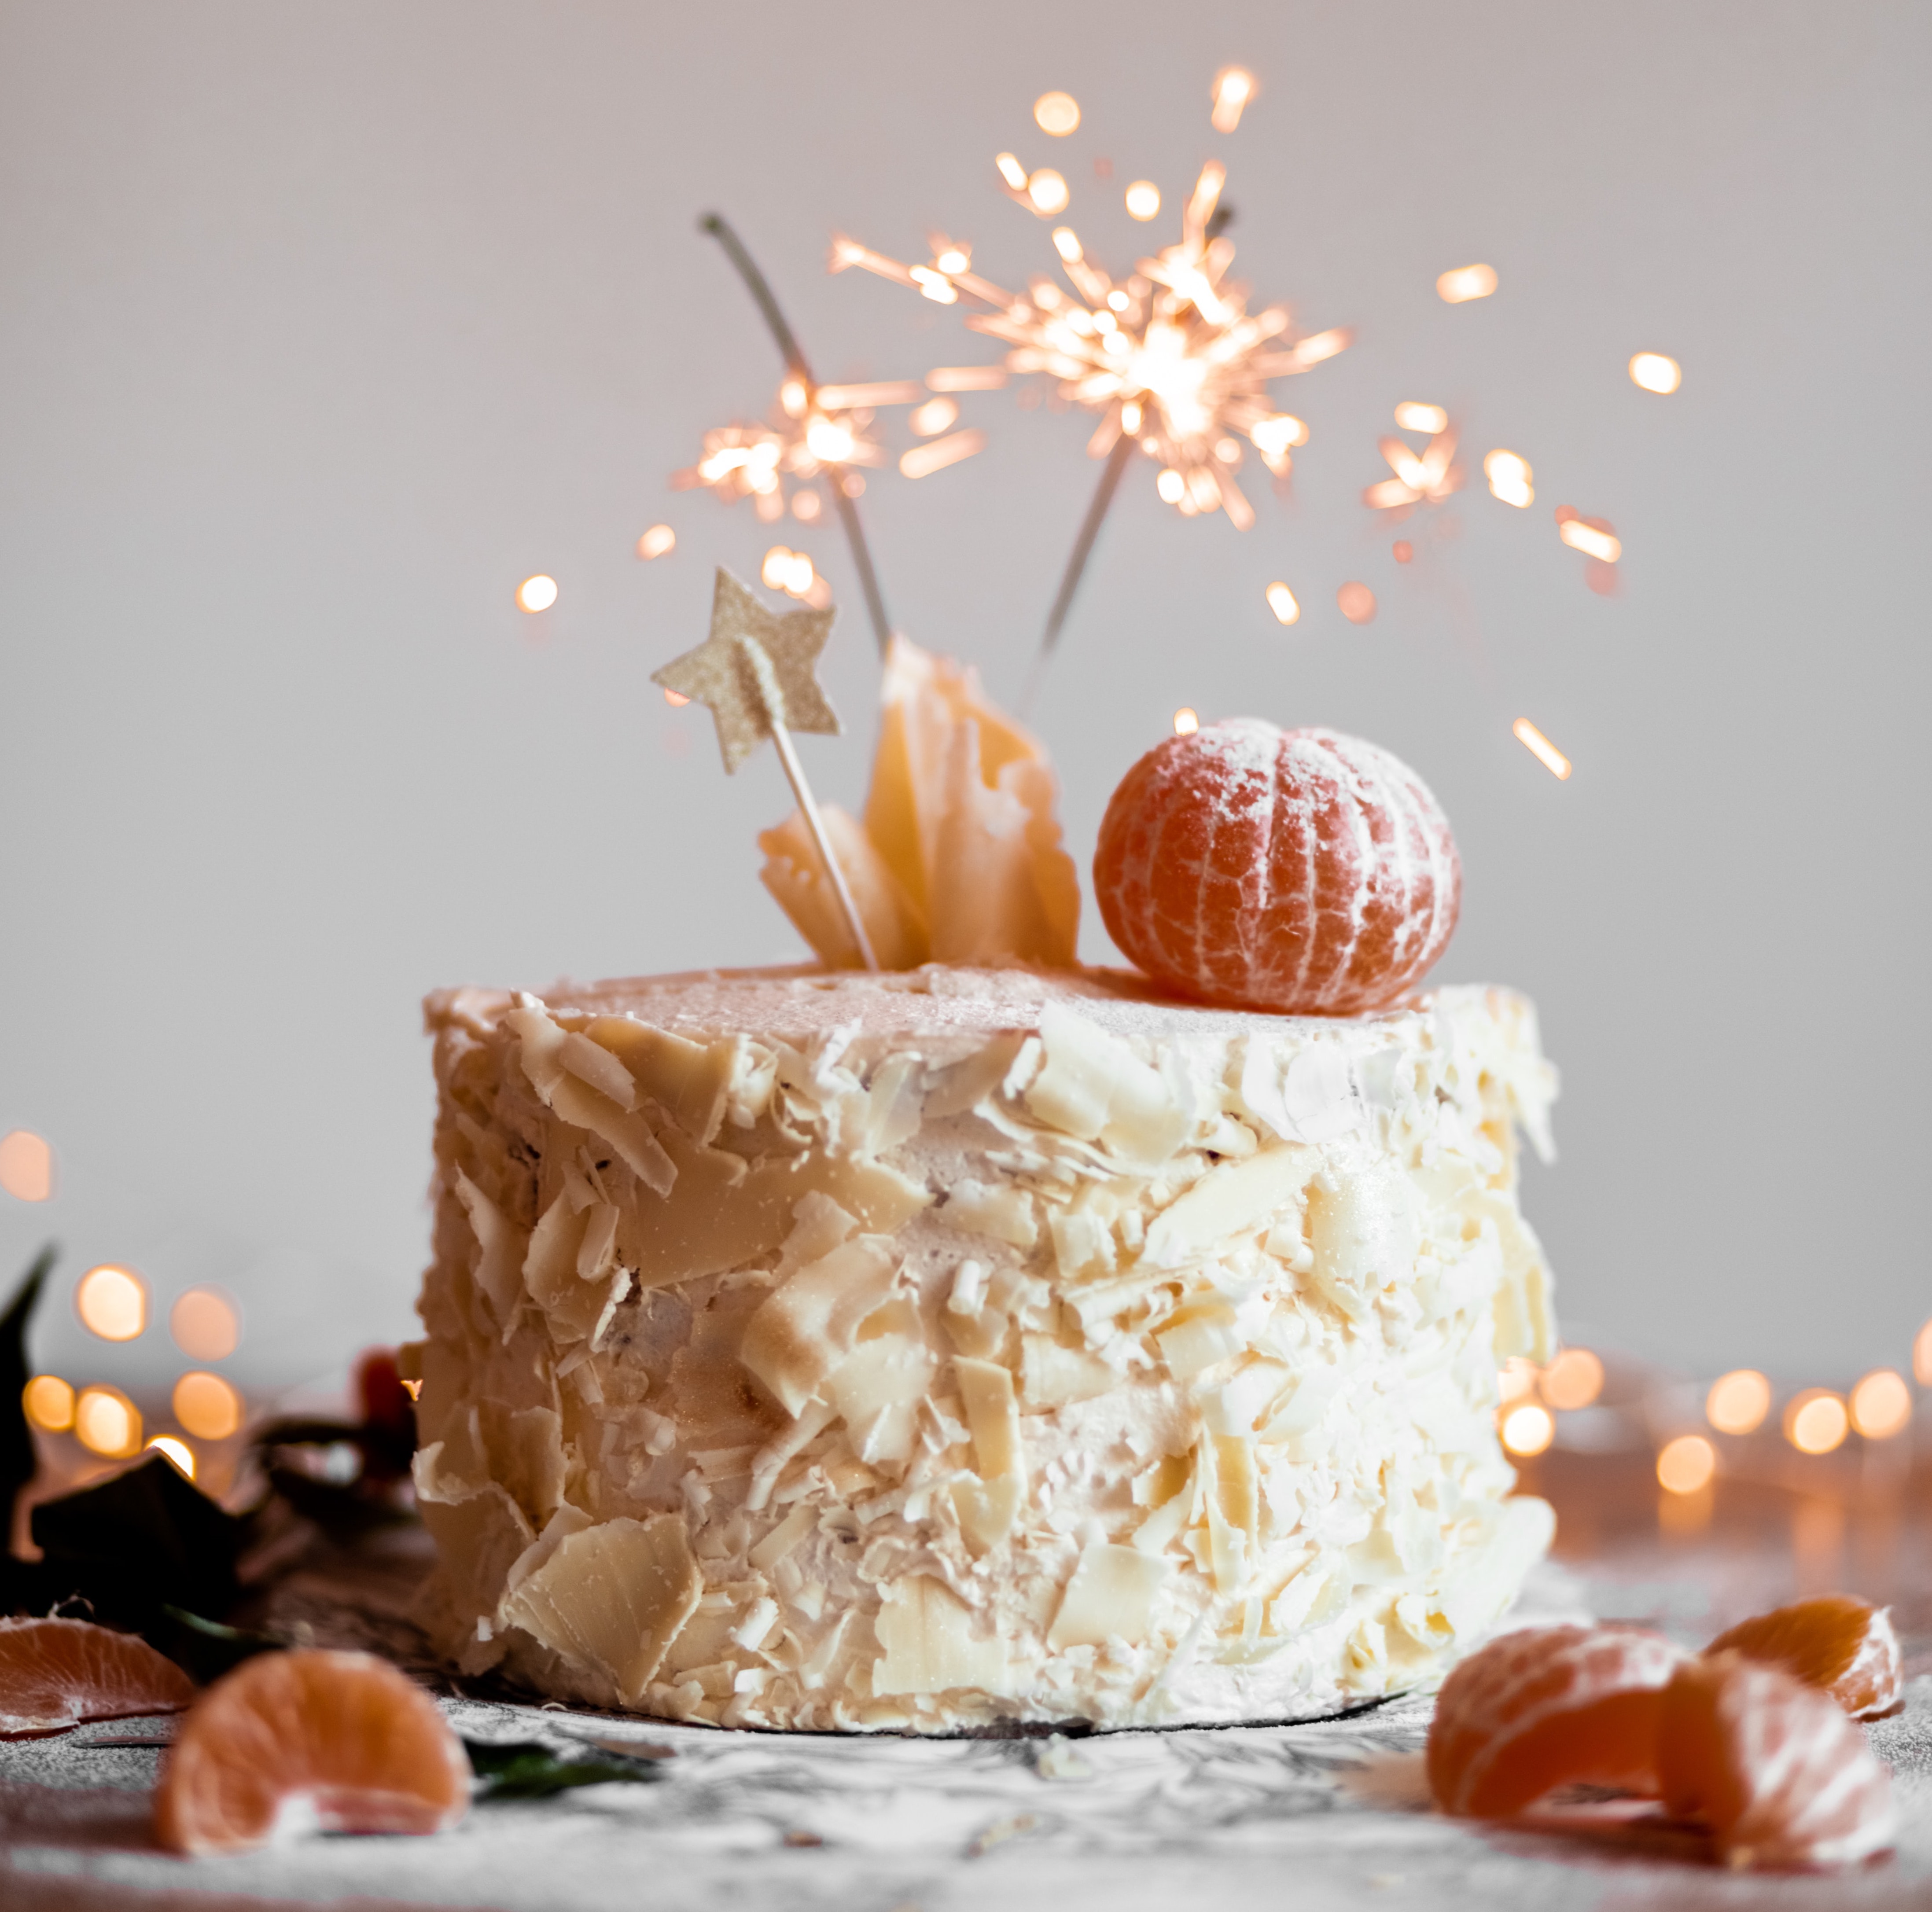 0th Birthday Ideas: How to Celebrate Your Milestone